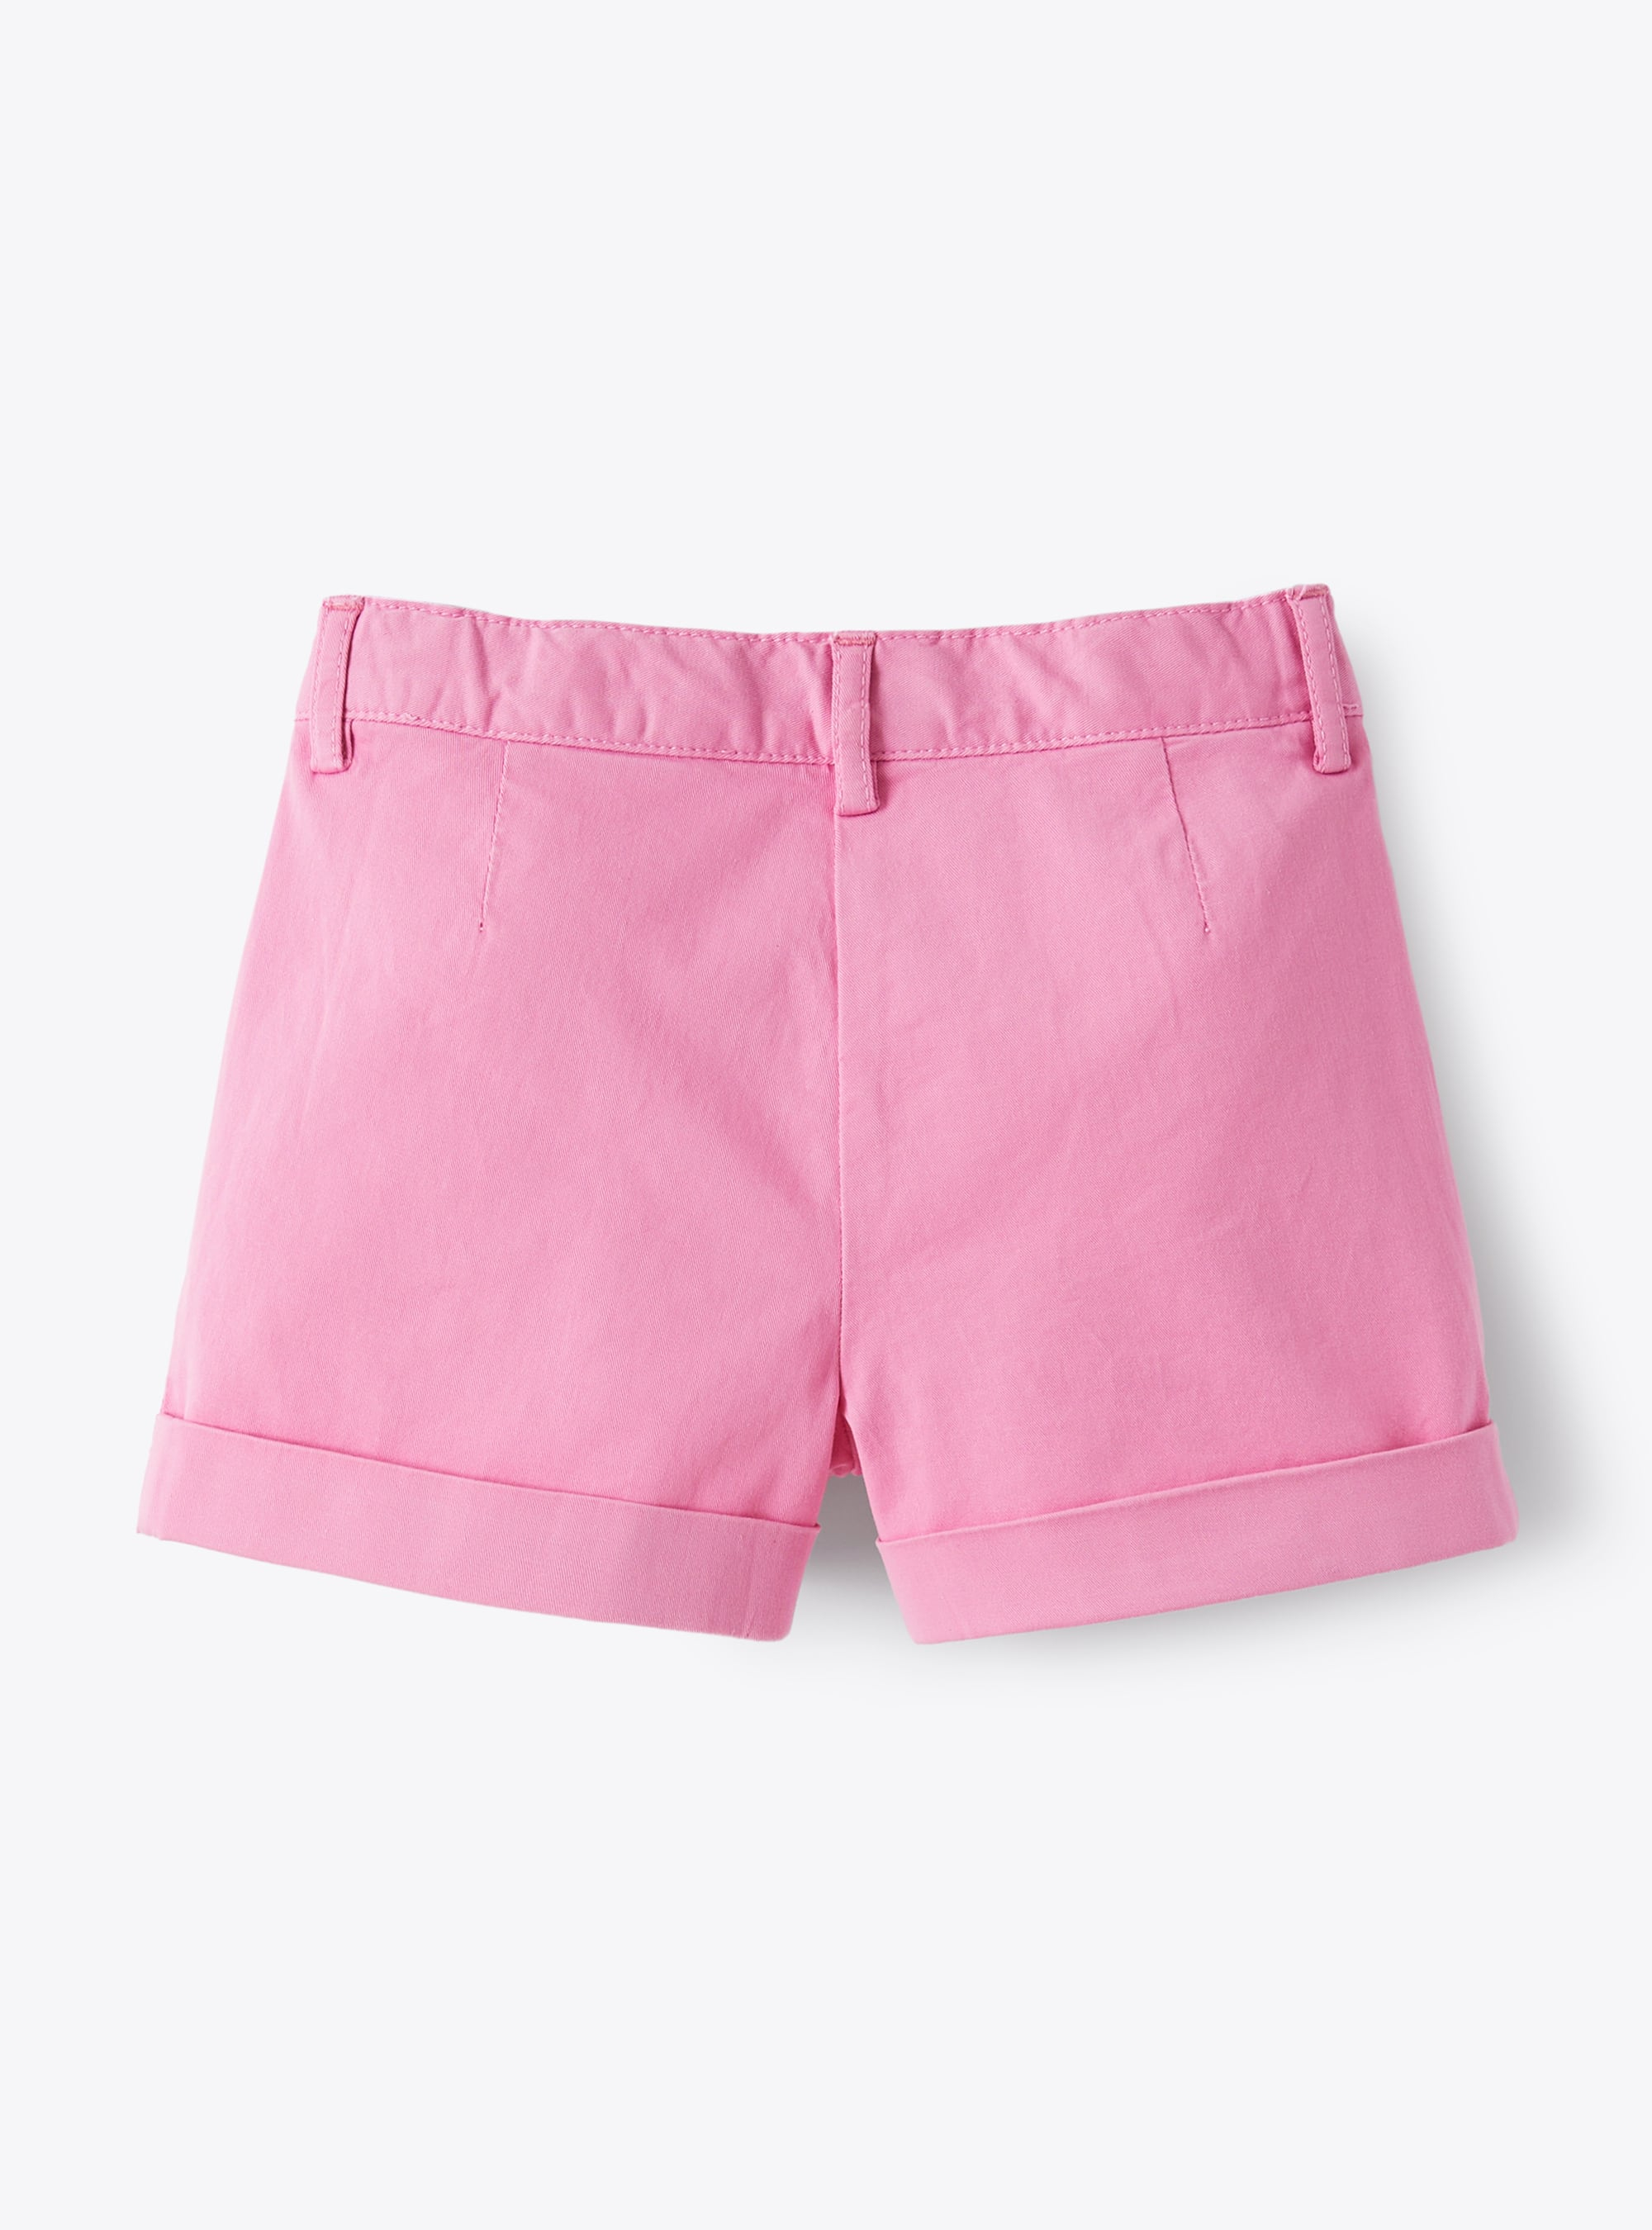 Bermuda shorts in pink cotton gabardine - Pink | Il Gufo